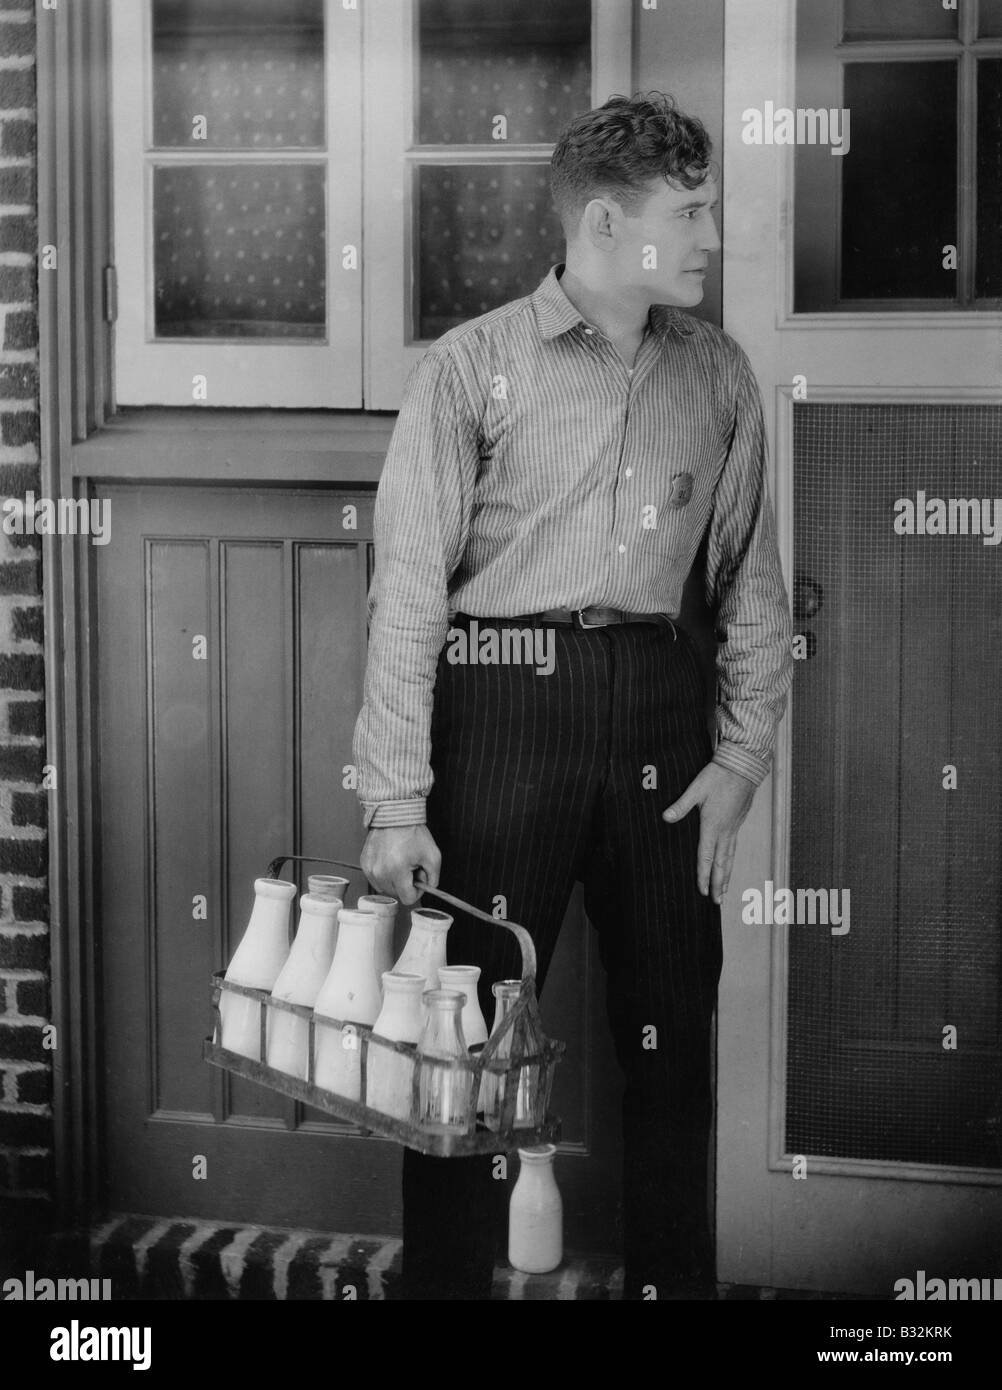 Man delivering milk Stock Photo